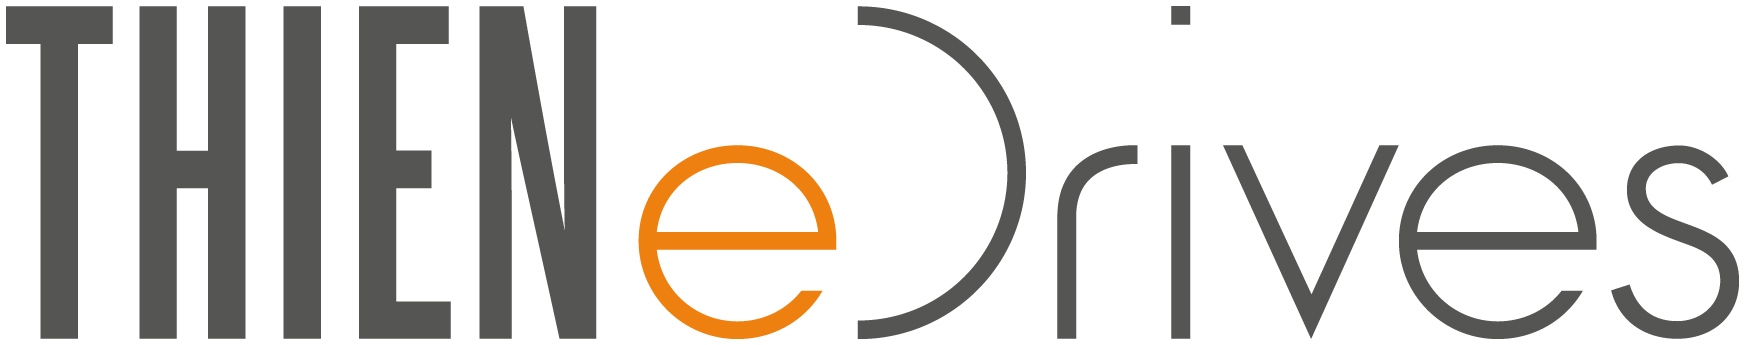 Logo Syrnemo partner Thien e drives URL www.thien-edrives.com english version